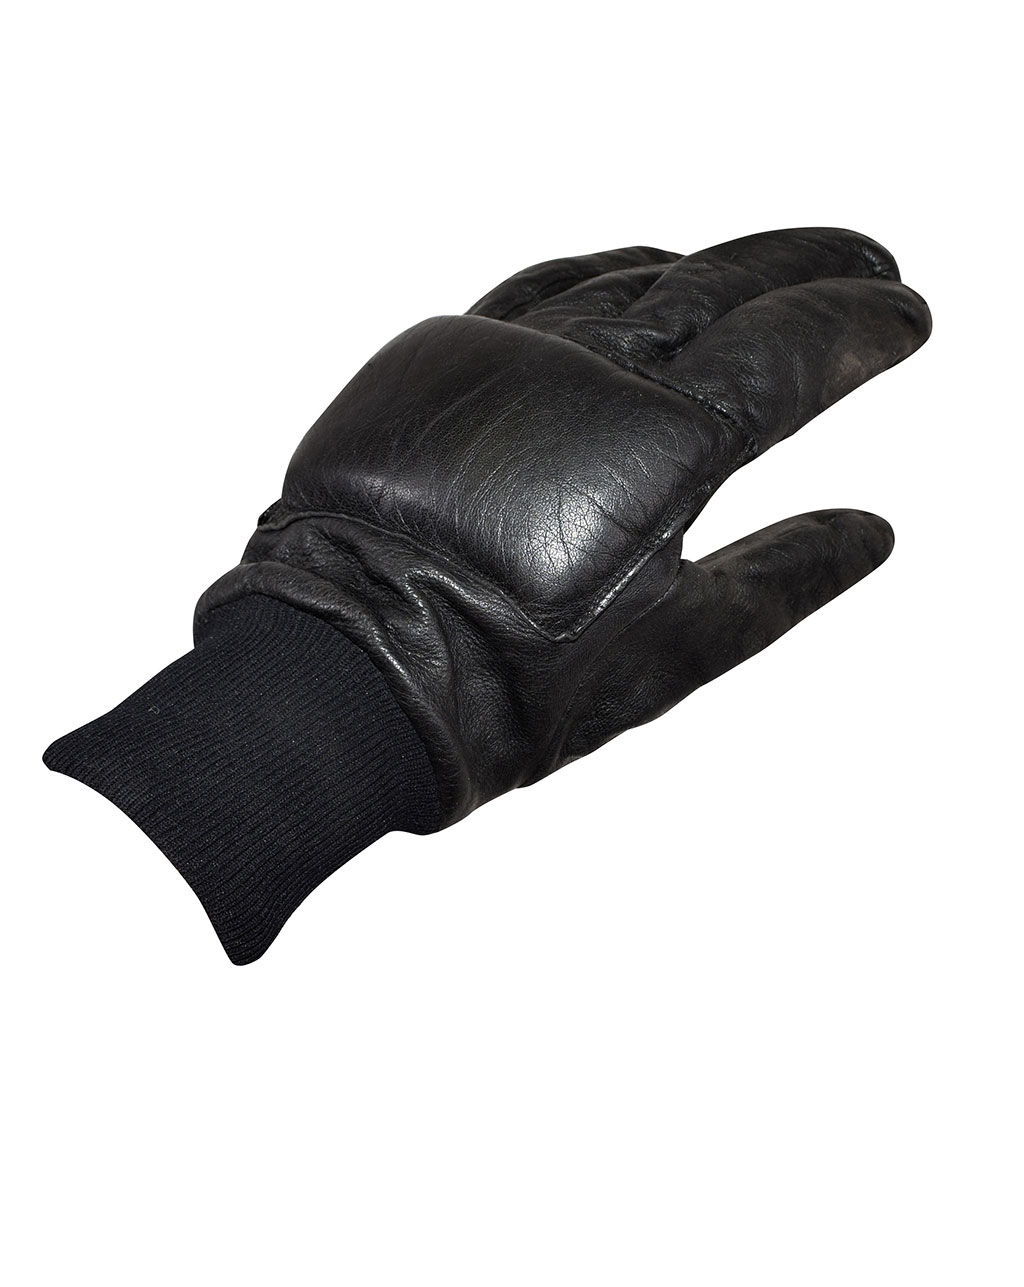 Перчатки кожа с мягкой защитой black б/у Англия